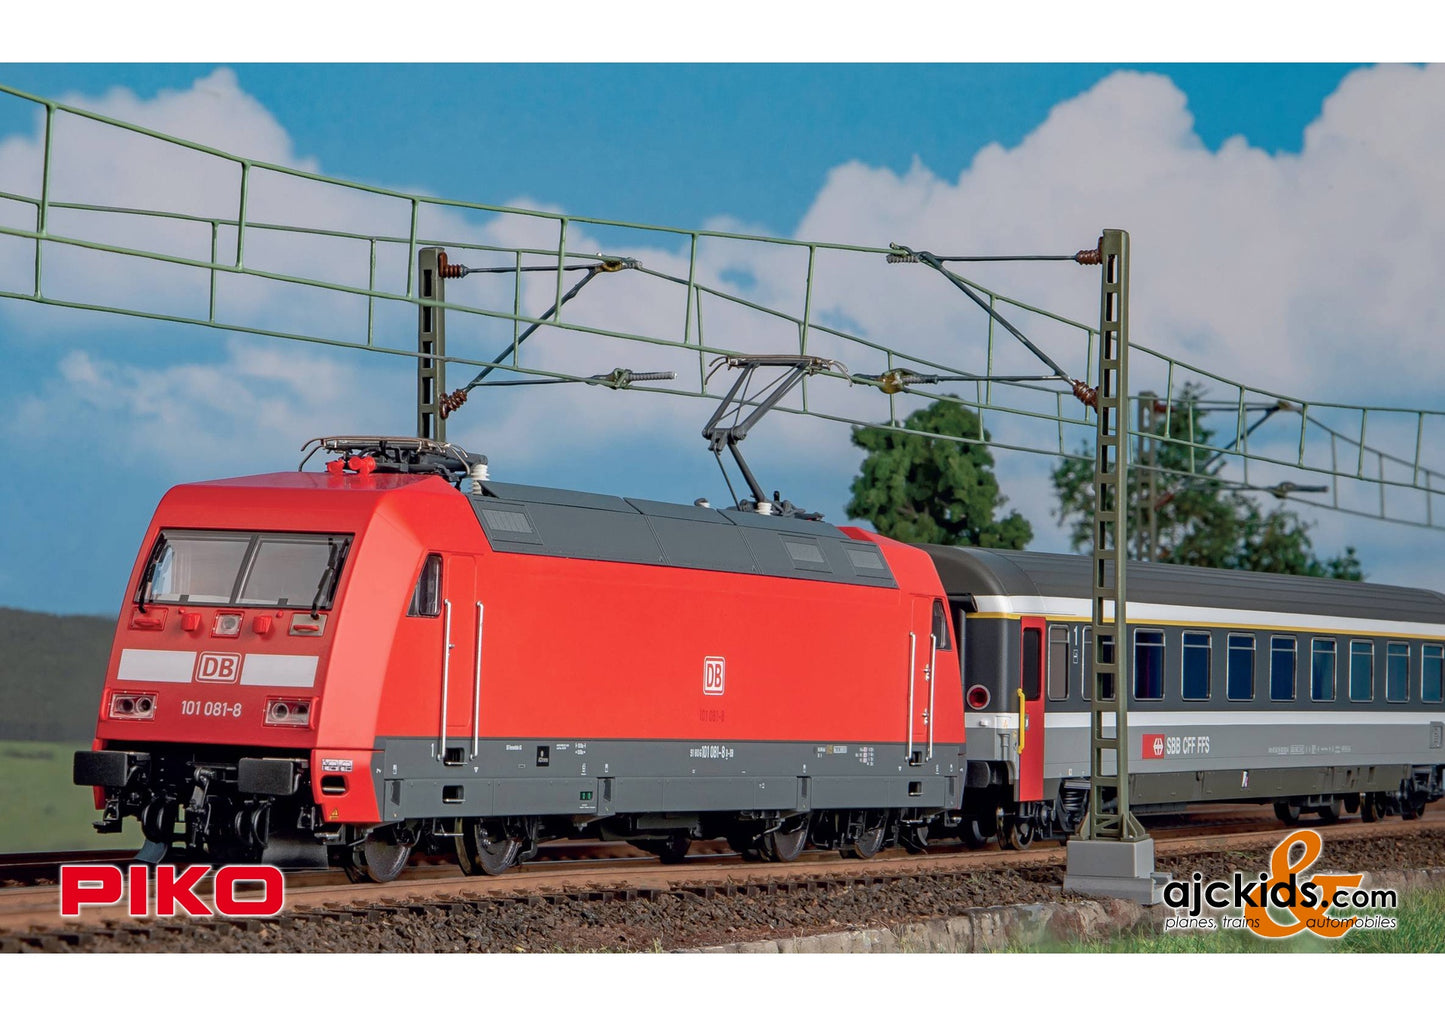 Piko 51100 - Electric Locomotive BR 101 DB AG VI